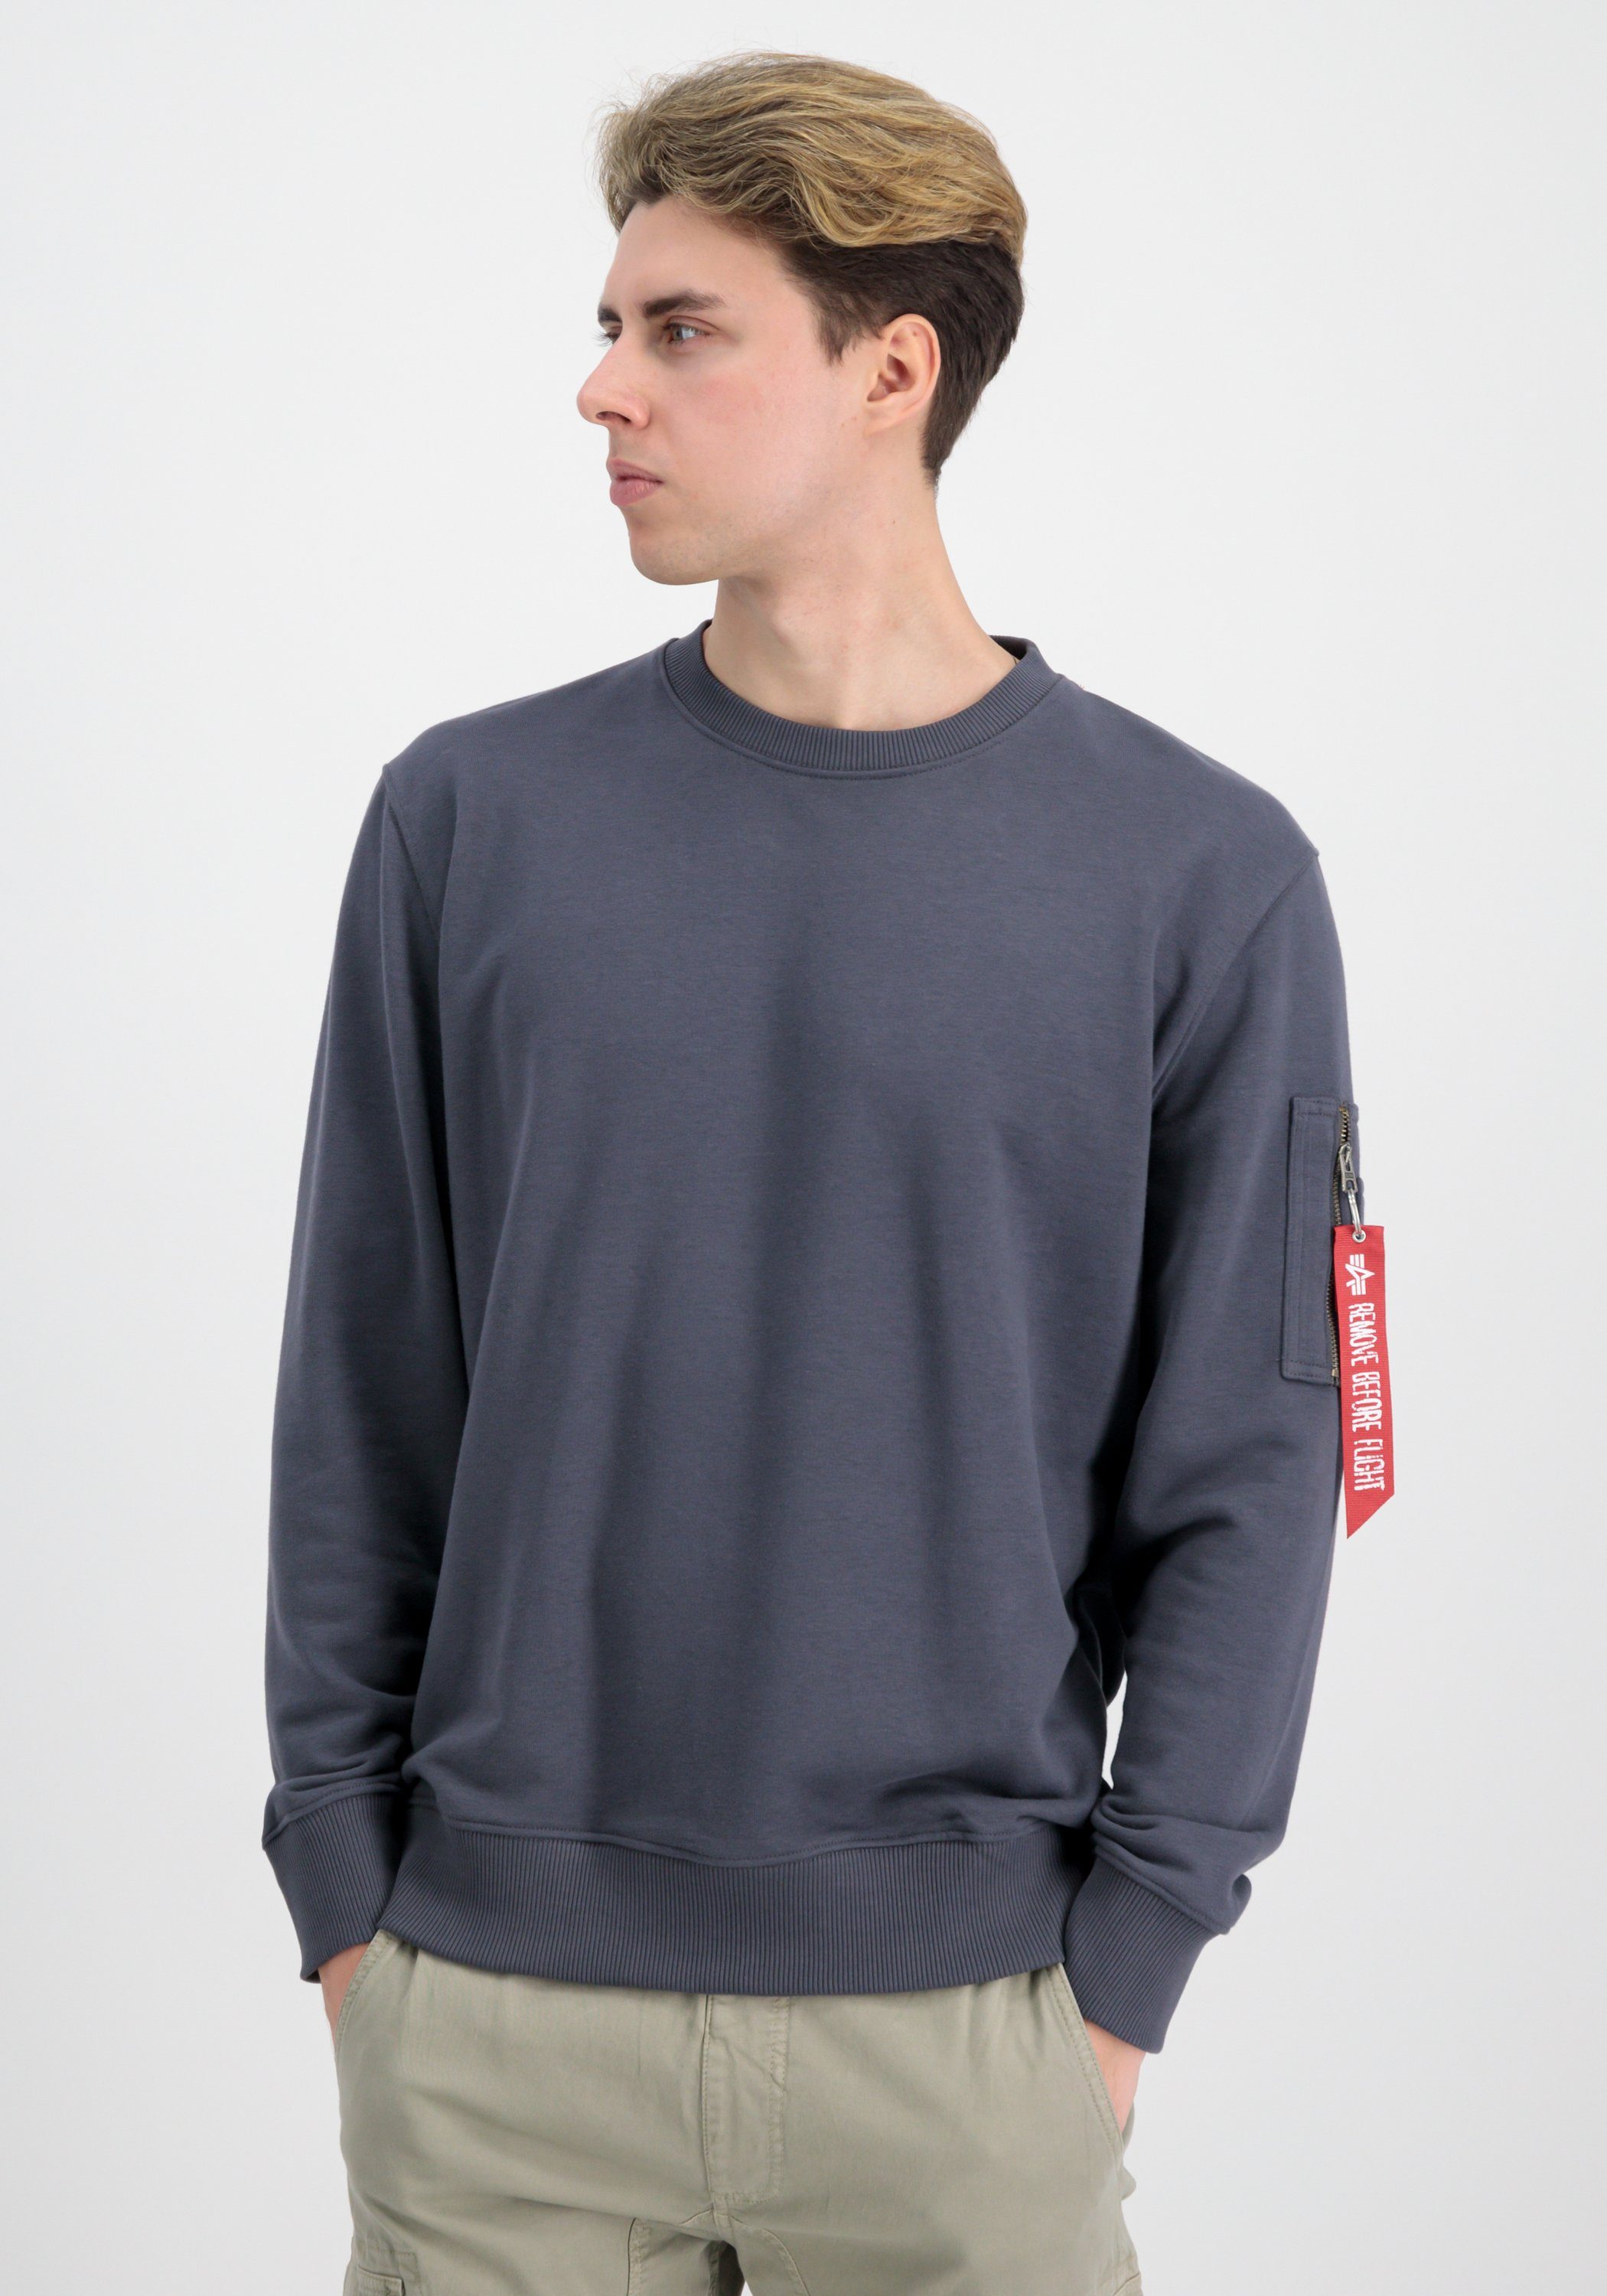 Alpha Blood Sweatshirts USN Alpha Sweater Industries Chit Industries Sweater - greyblack Men